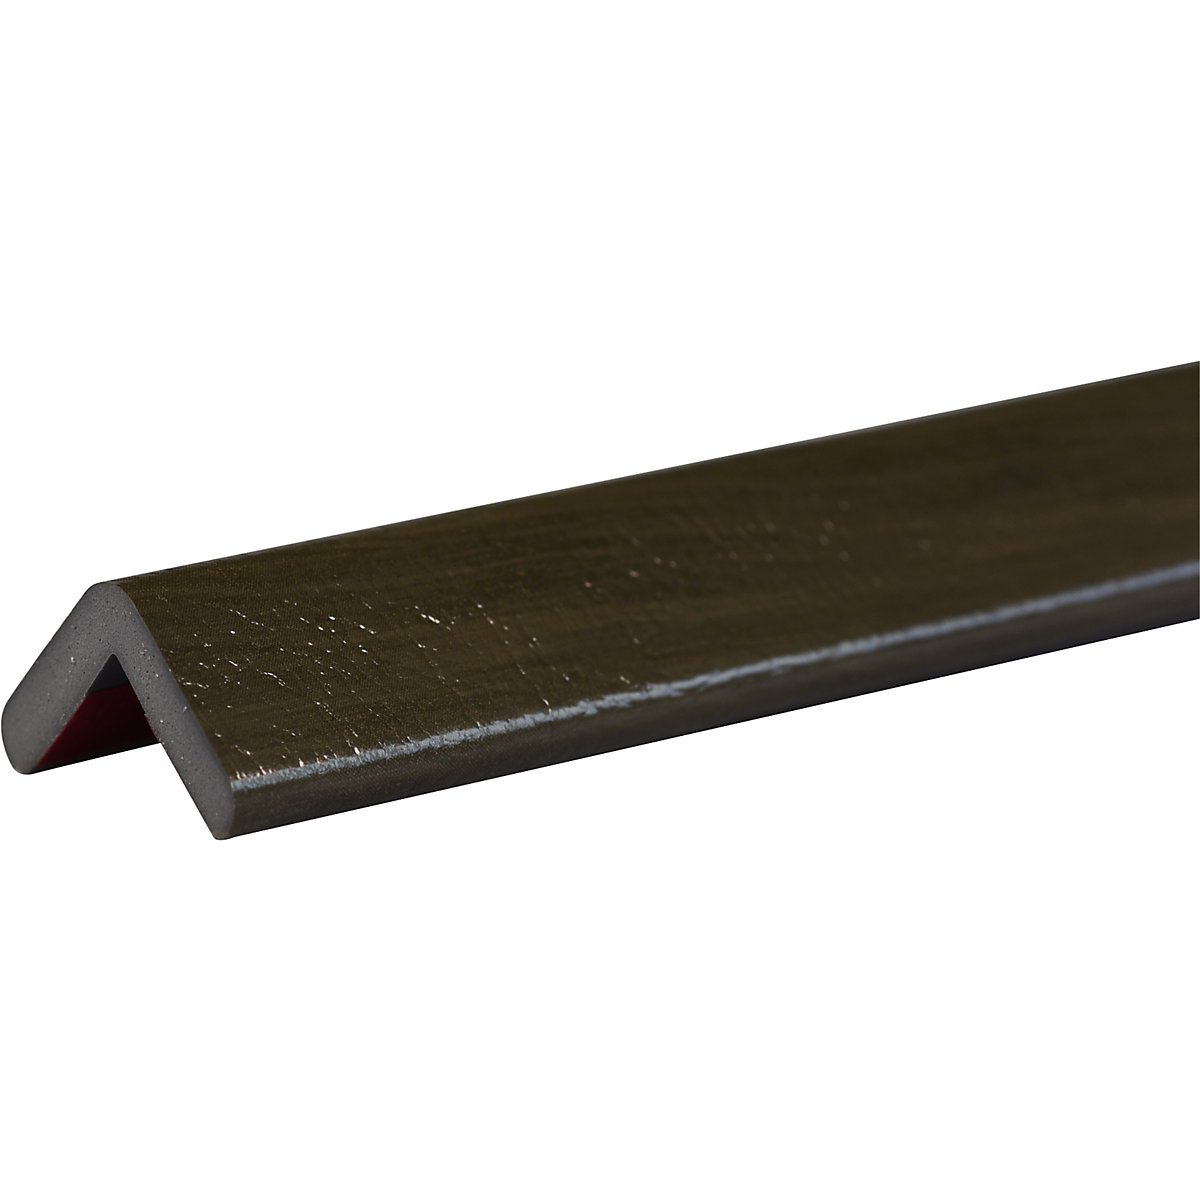 Knuffi® corner protection – SHG, type H, 1 m piece, khaki-24